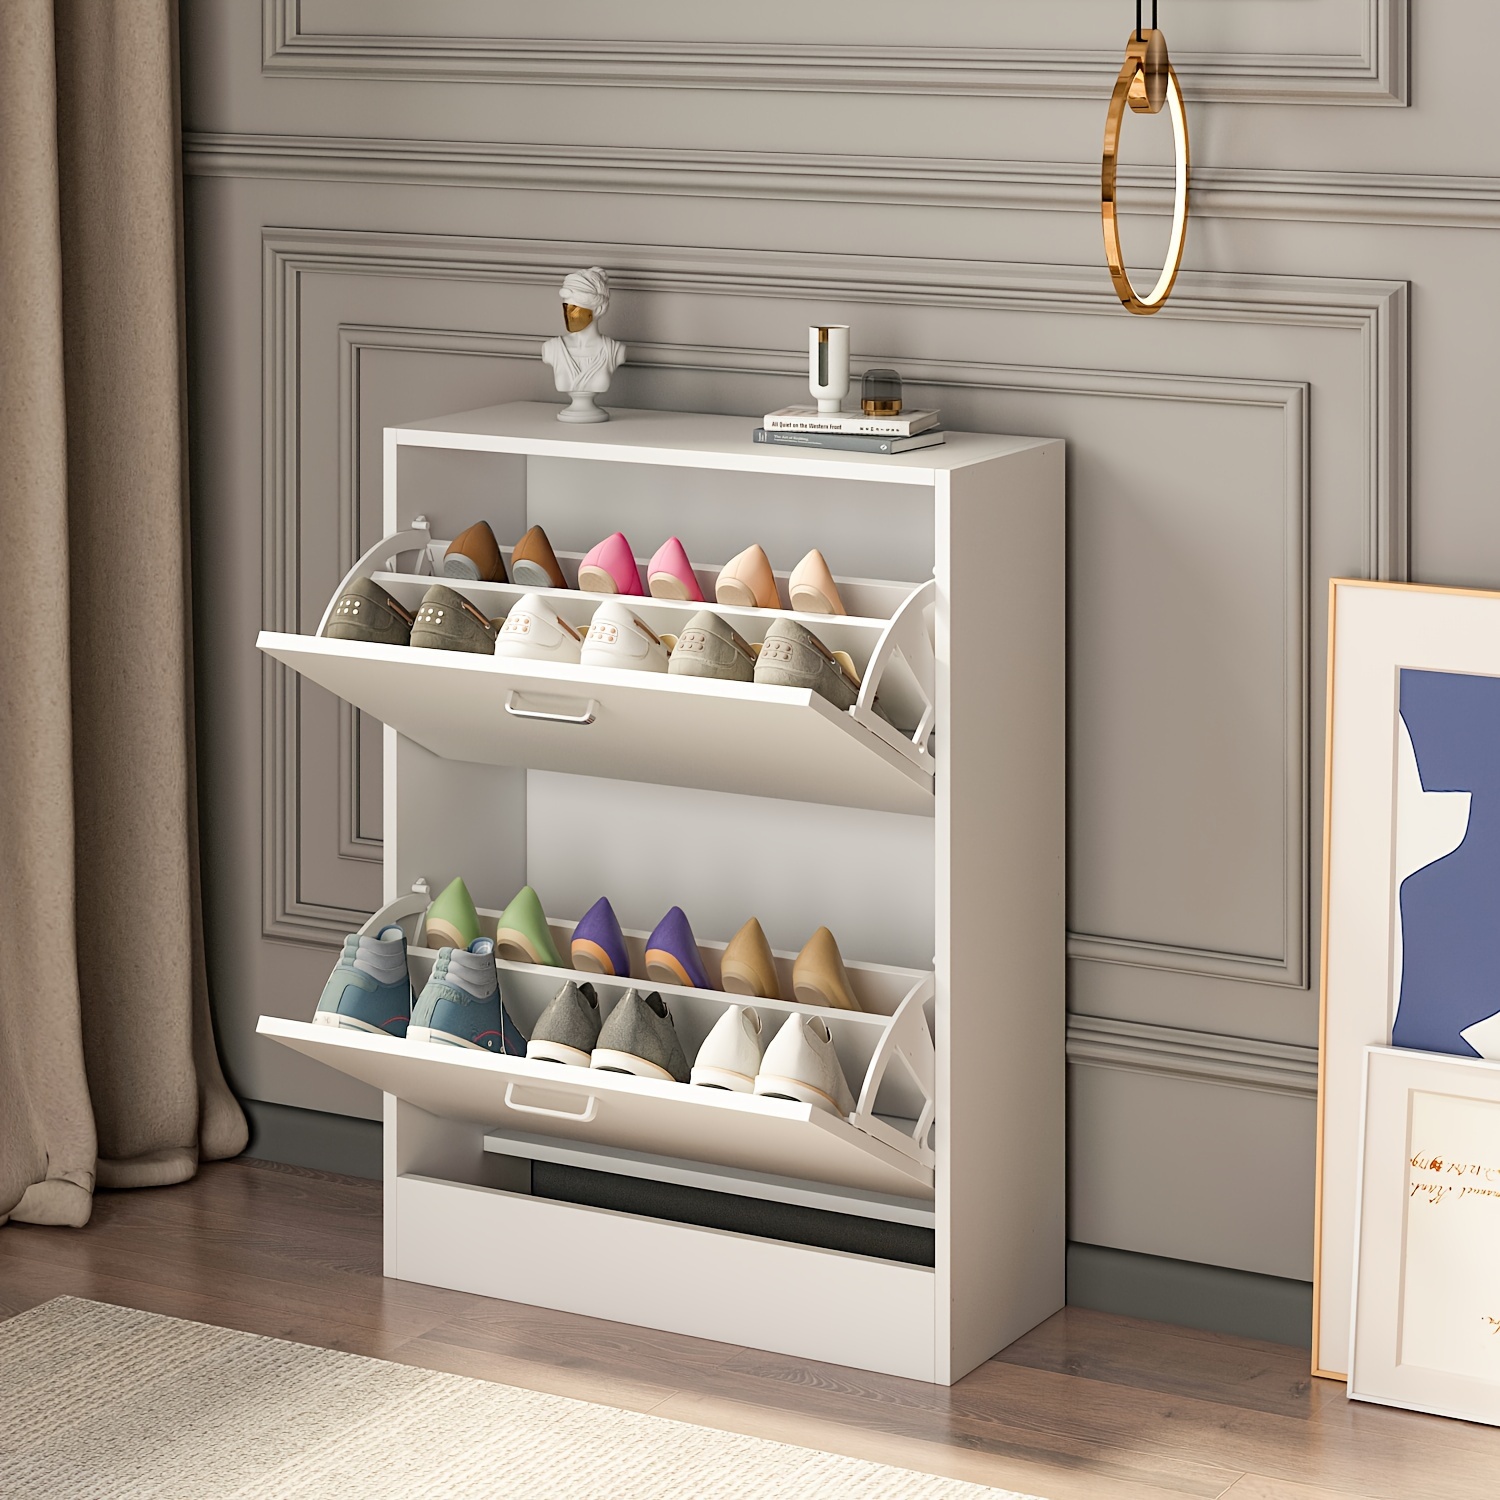 

Shoe Cabinet With 2 Drawers, Shoe Storage Organizer, Freestanding Shoe Rack Storage